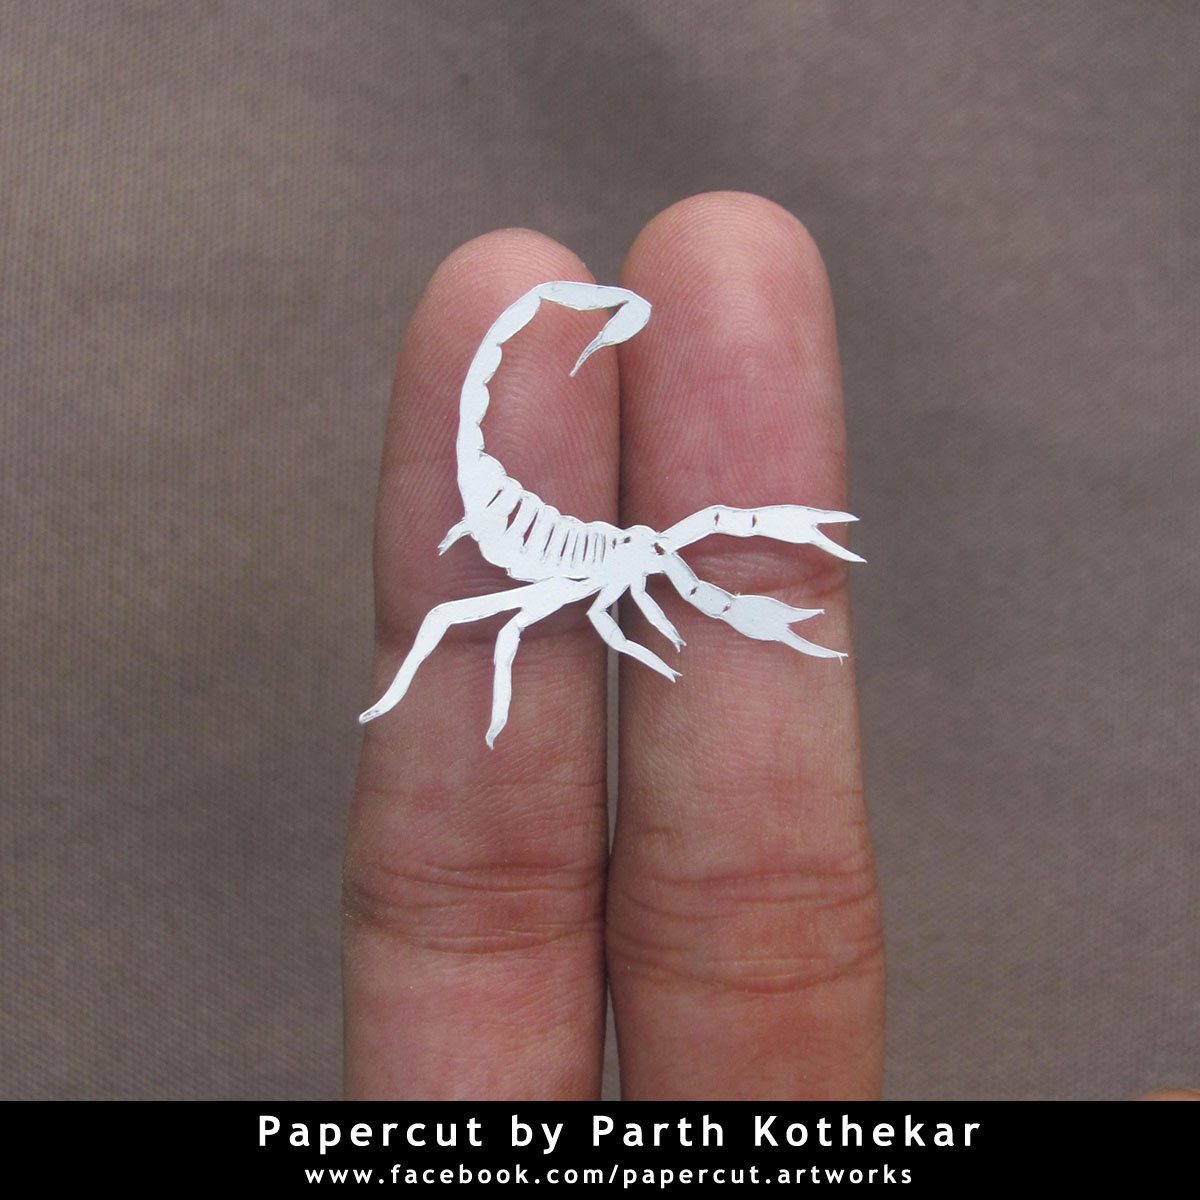 artisan intricate Miniature papercut artworks paper art papercutting papercraft craft Tiny cute papercutouts handmade handcut